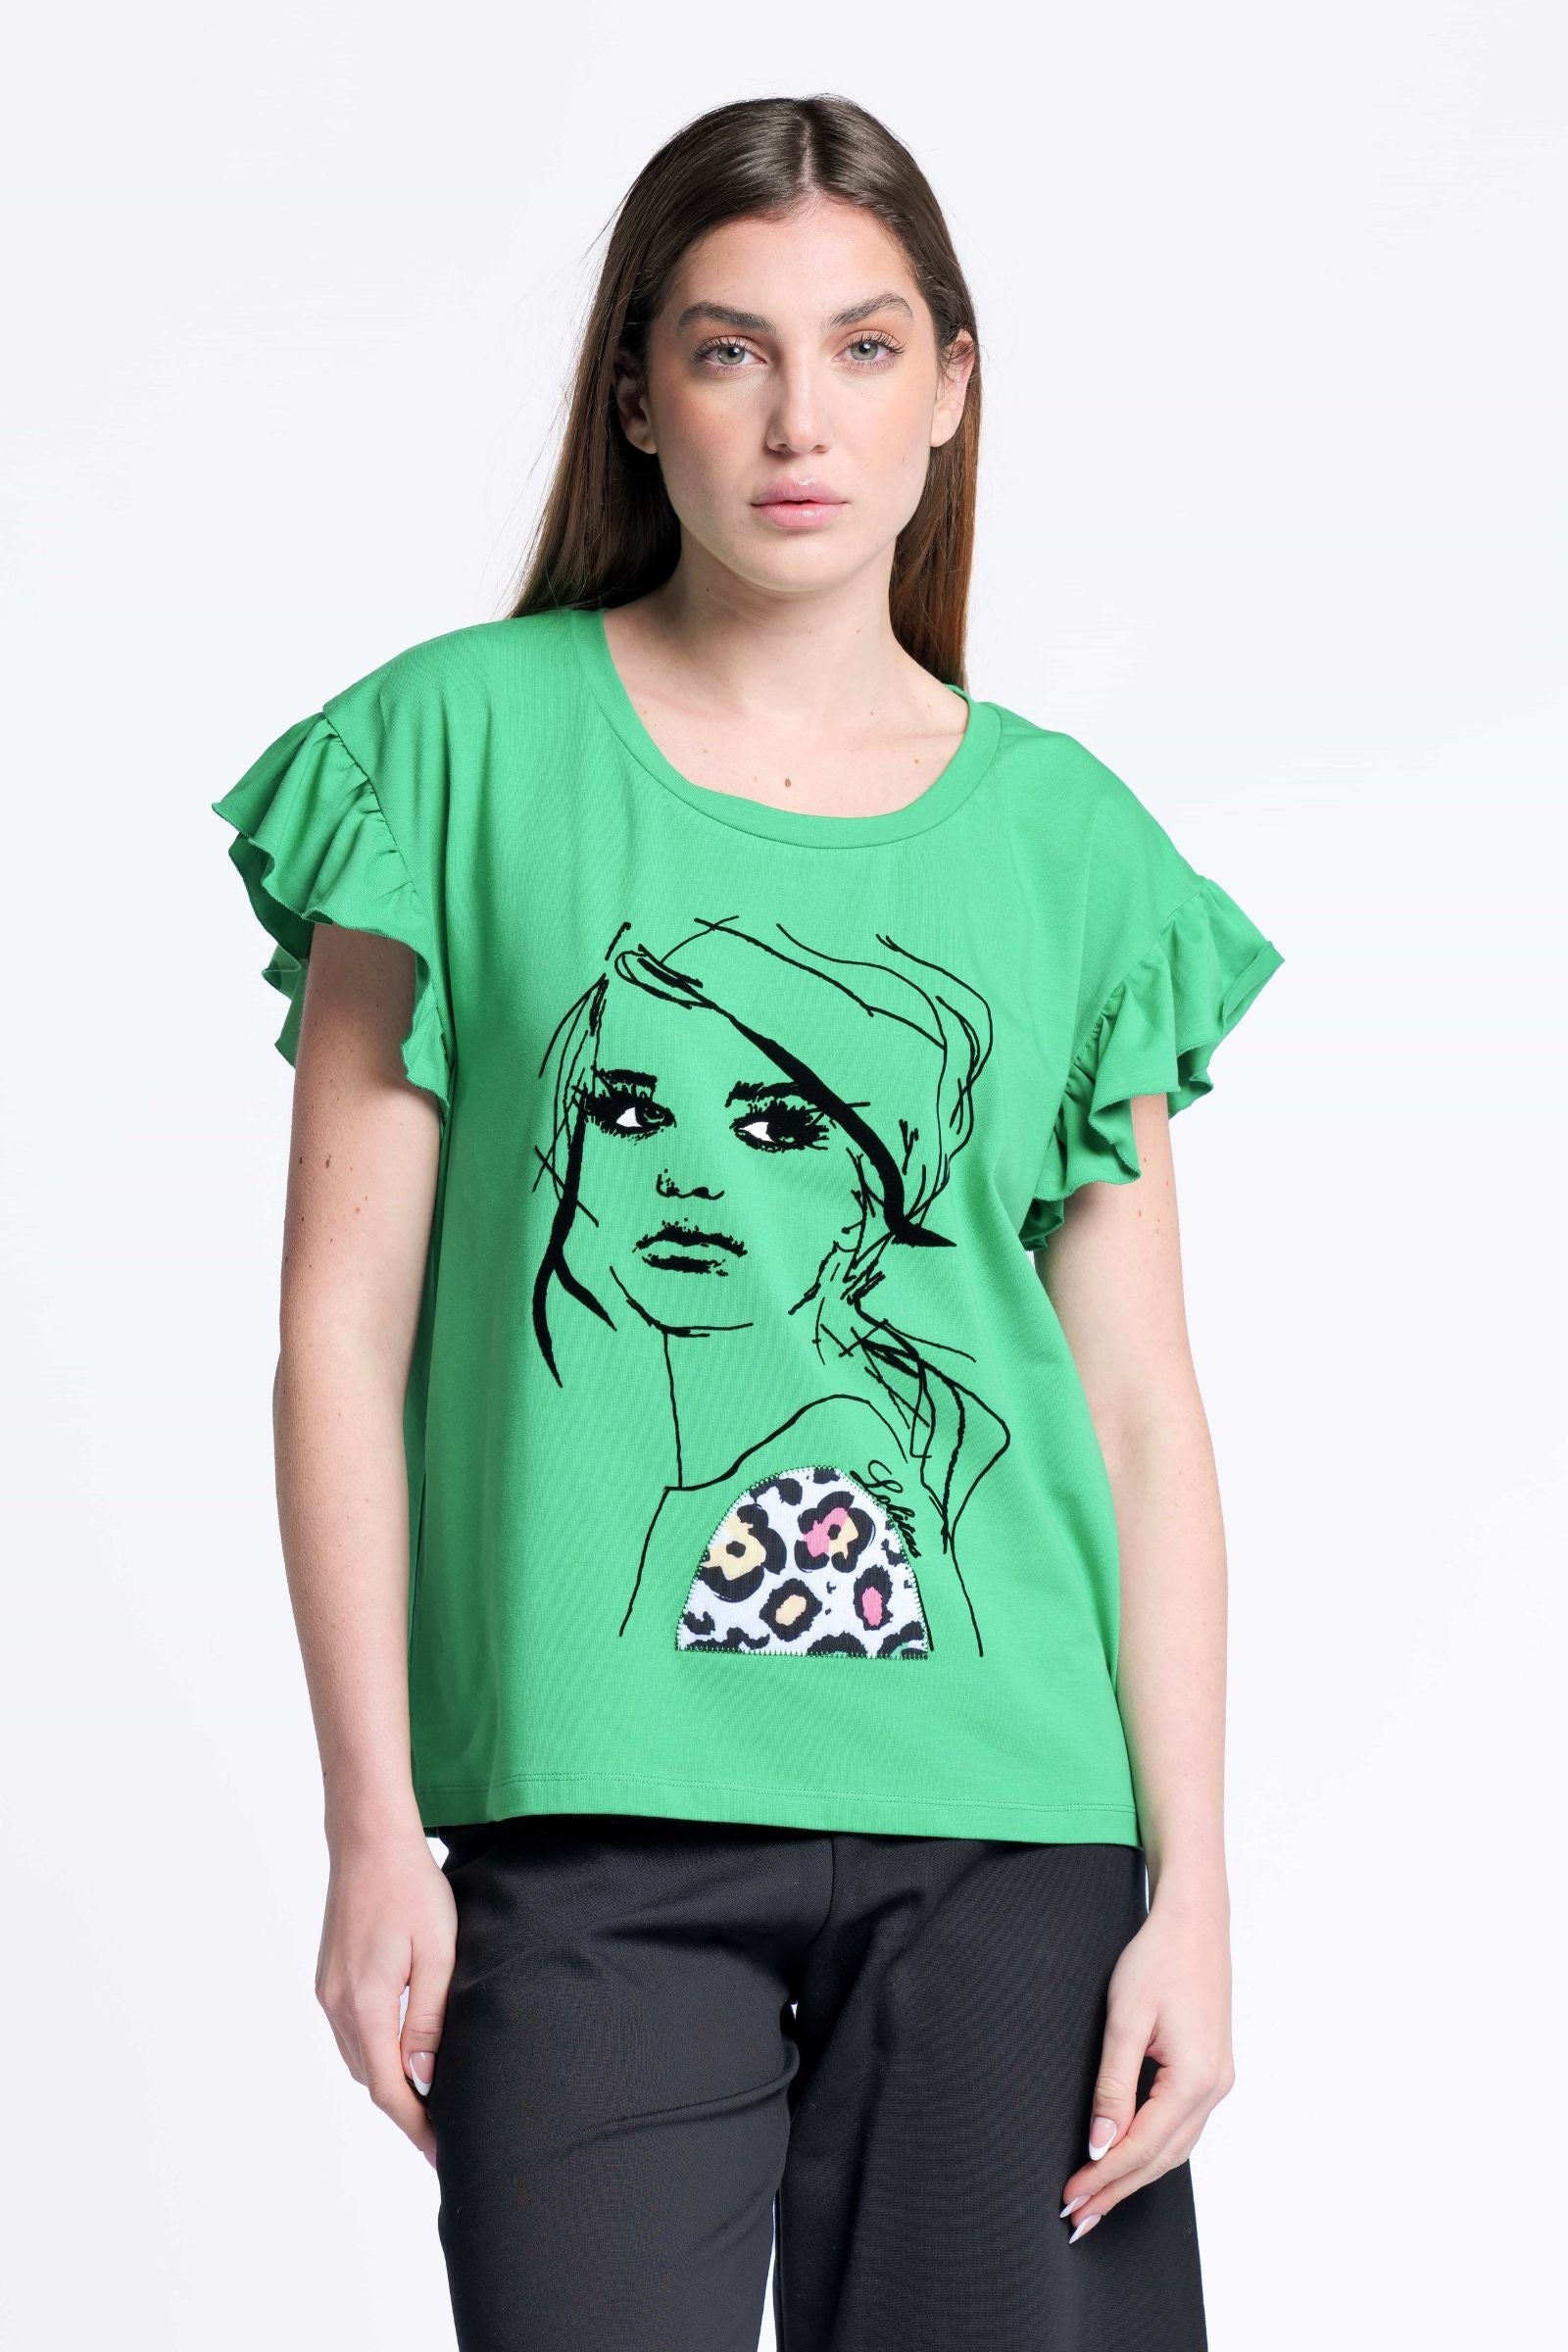 Camiseta verde algodon estampado cara Lolitas&L - lolitasyl.com